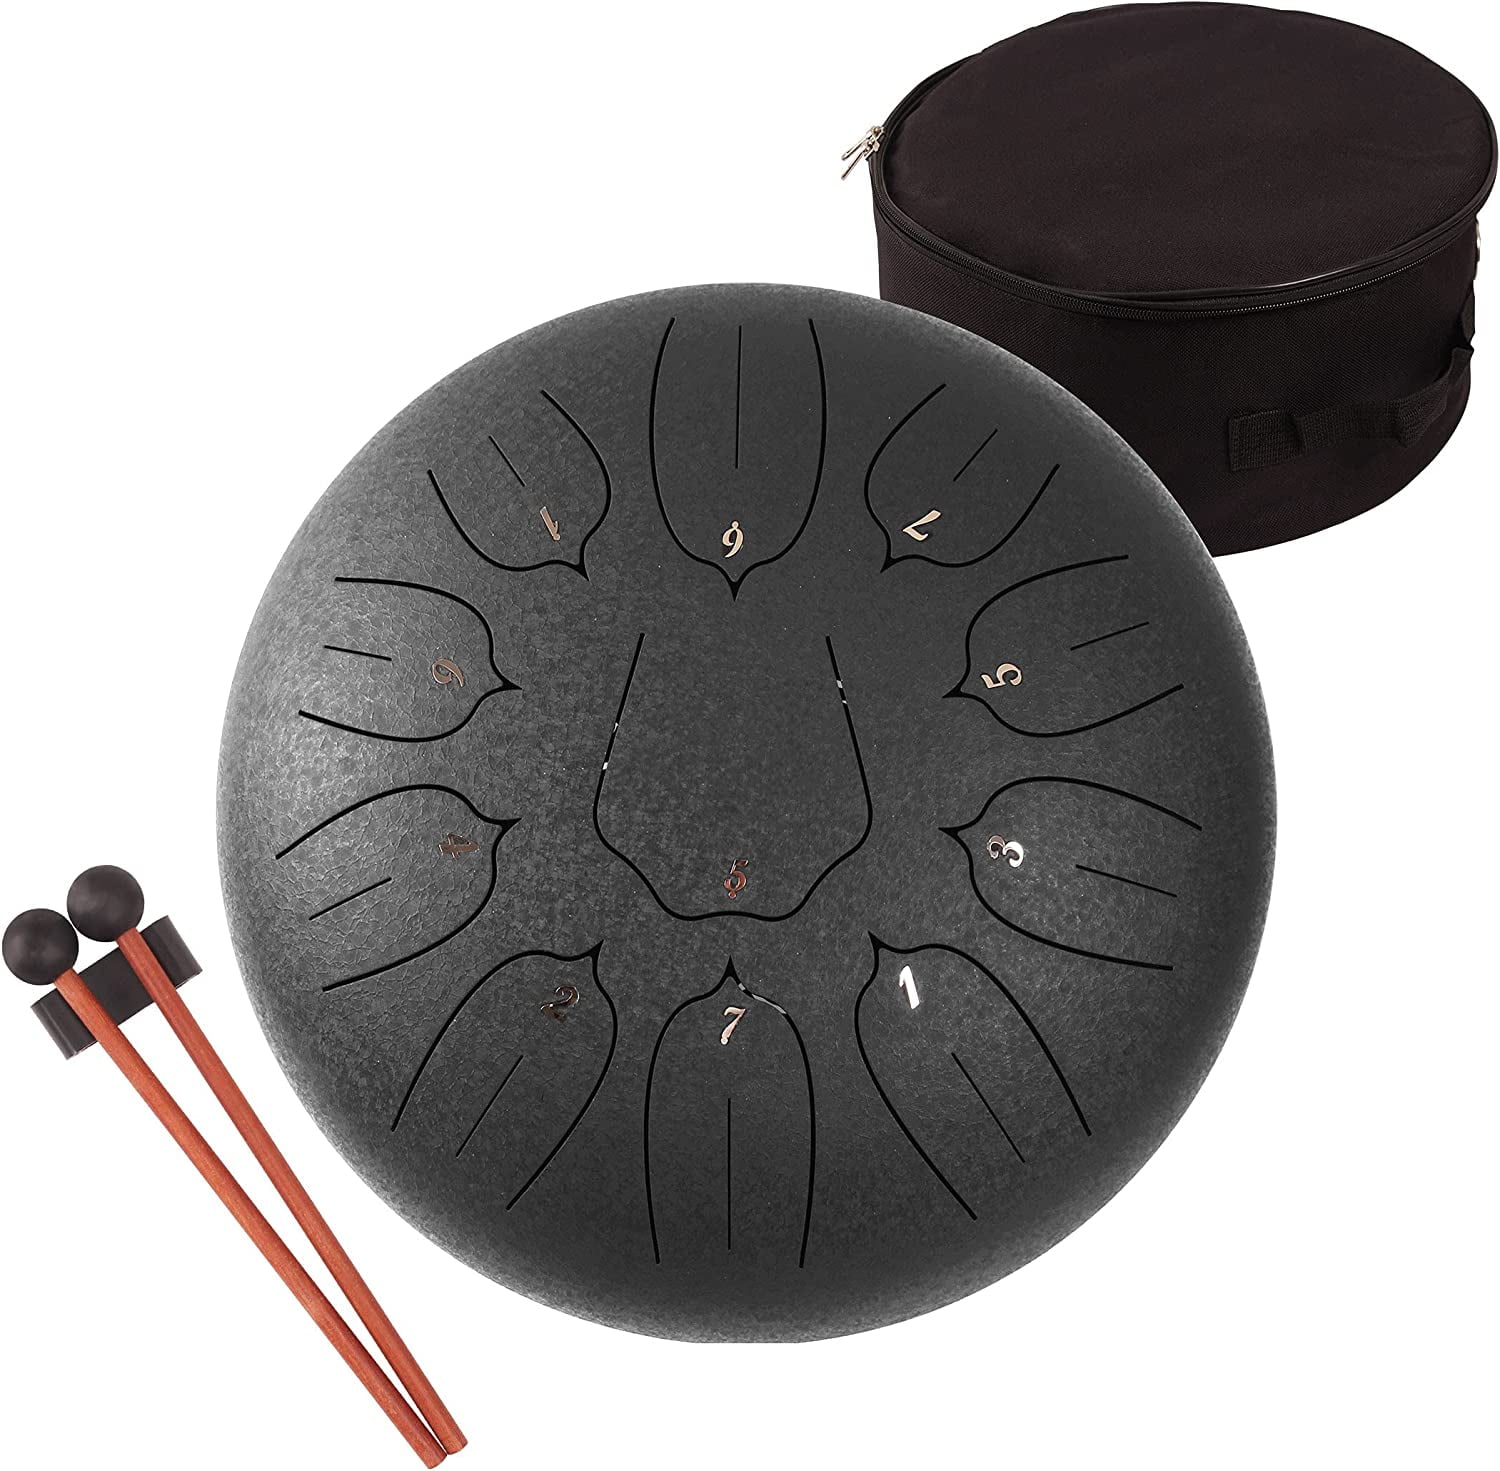 Handpan drum 12 Inch 13 Tone Steel Tongue Drum Hand Pan Drum Yoga Meditation